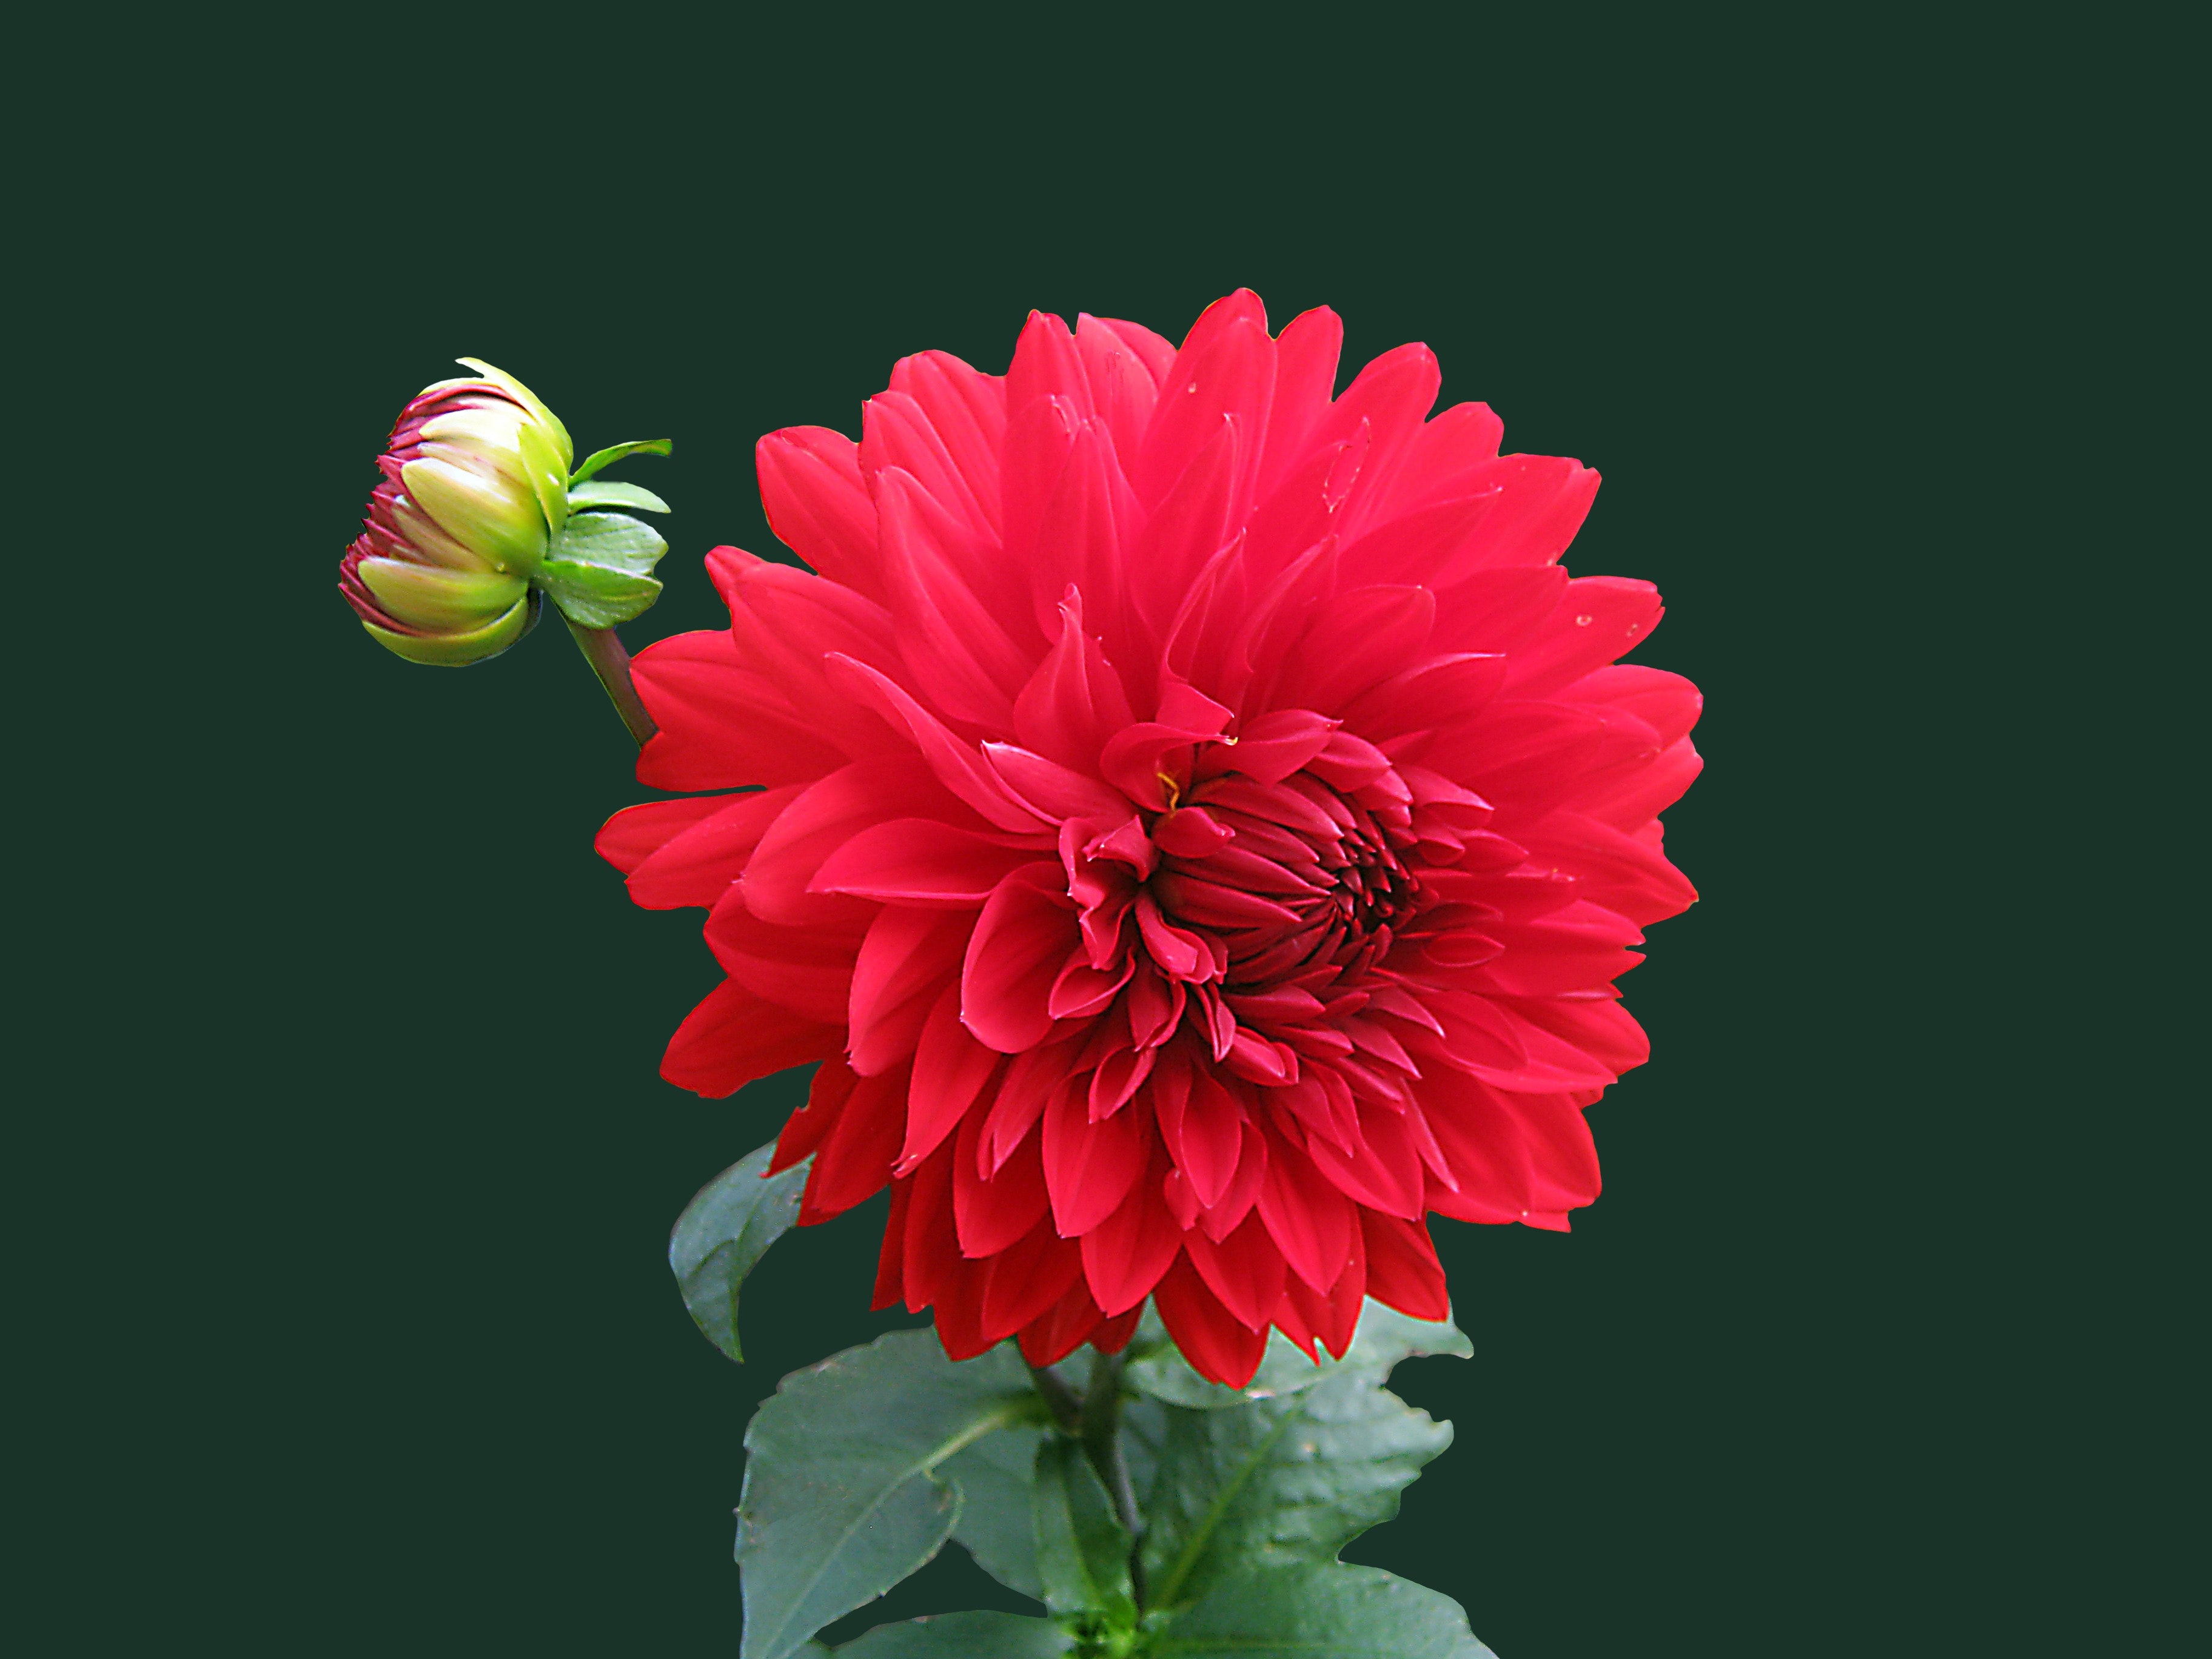 Red Dahlia Flower · Free Stock Photo